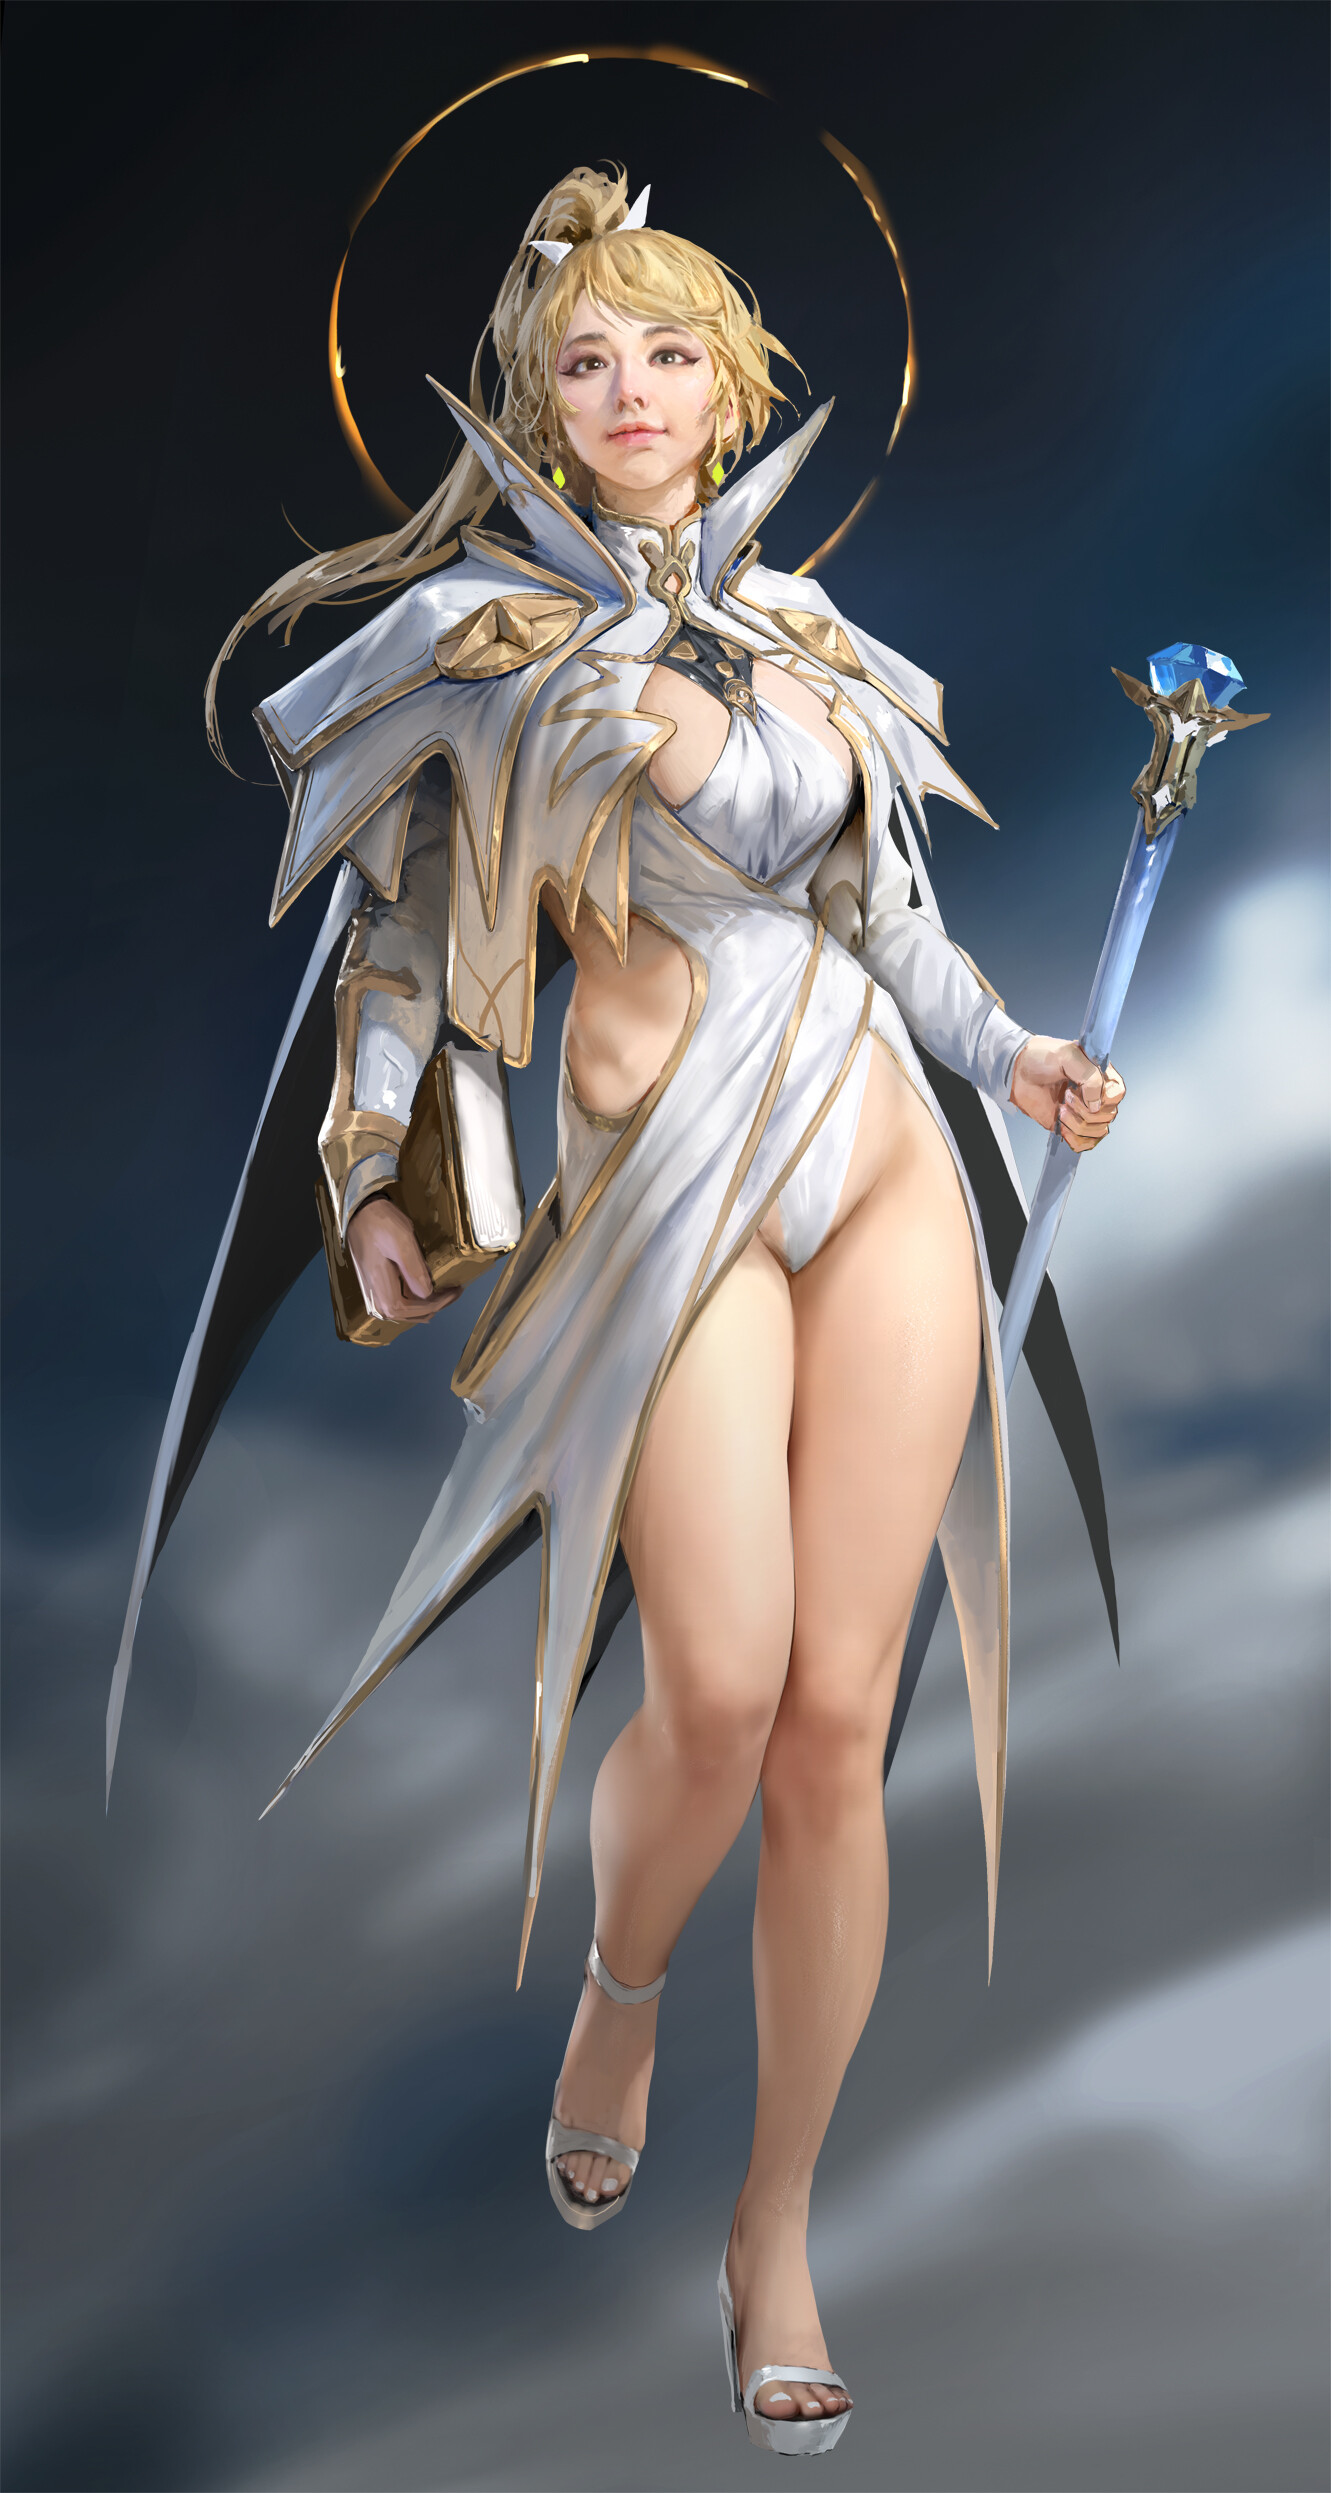 General 1331x2493 artwork fantasy art fantasy girl blonde long hair thighs legs staff Vergil Hoo